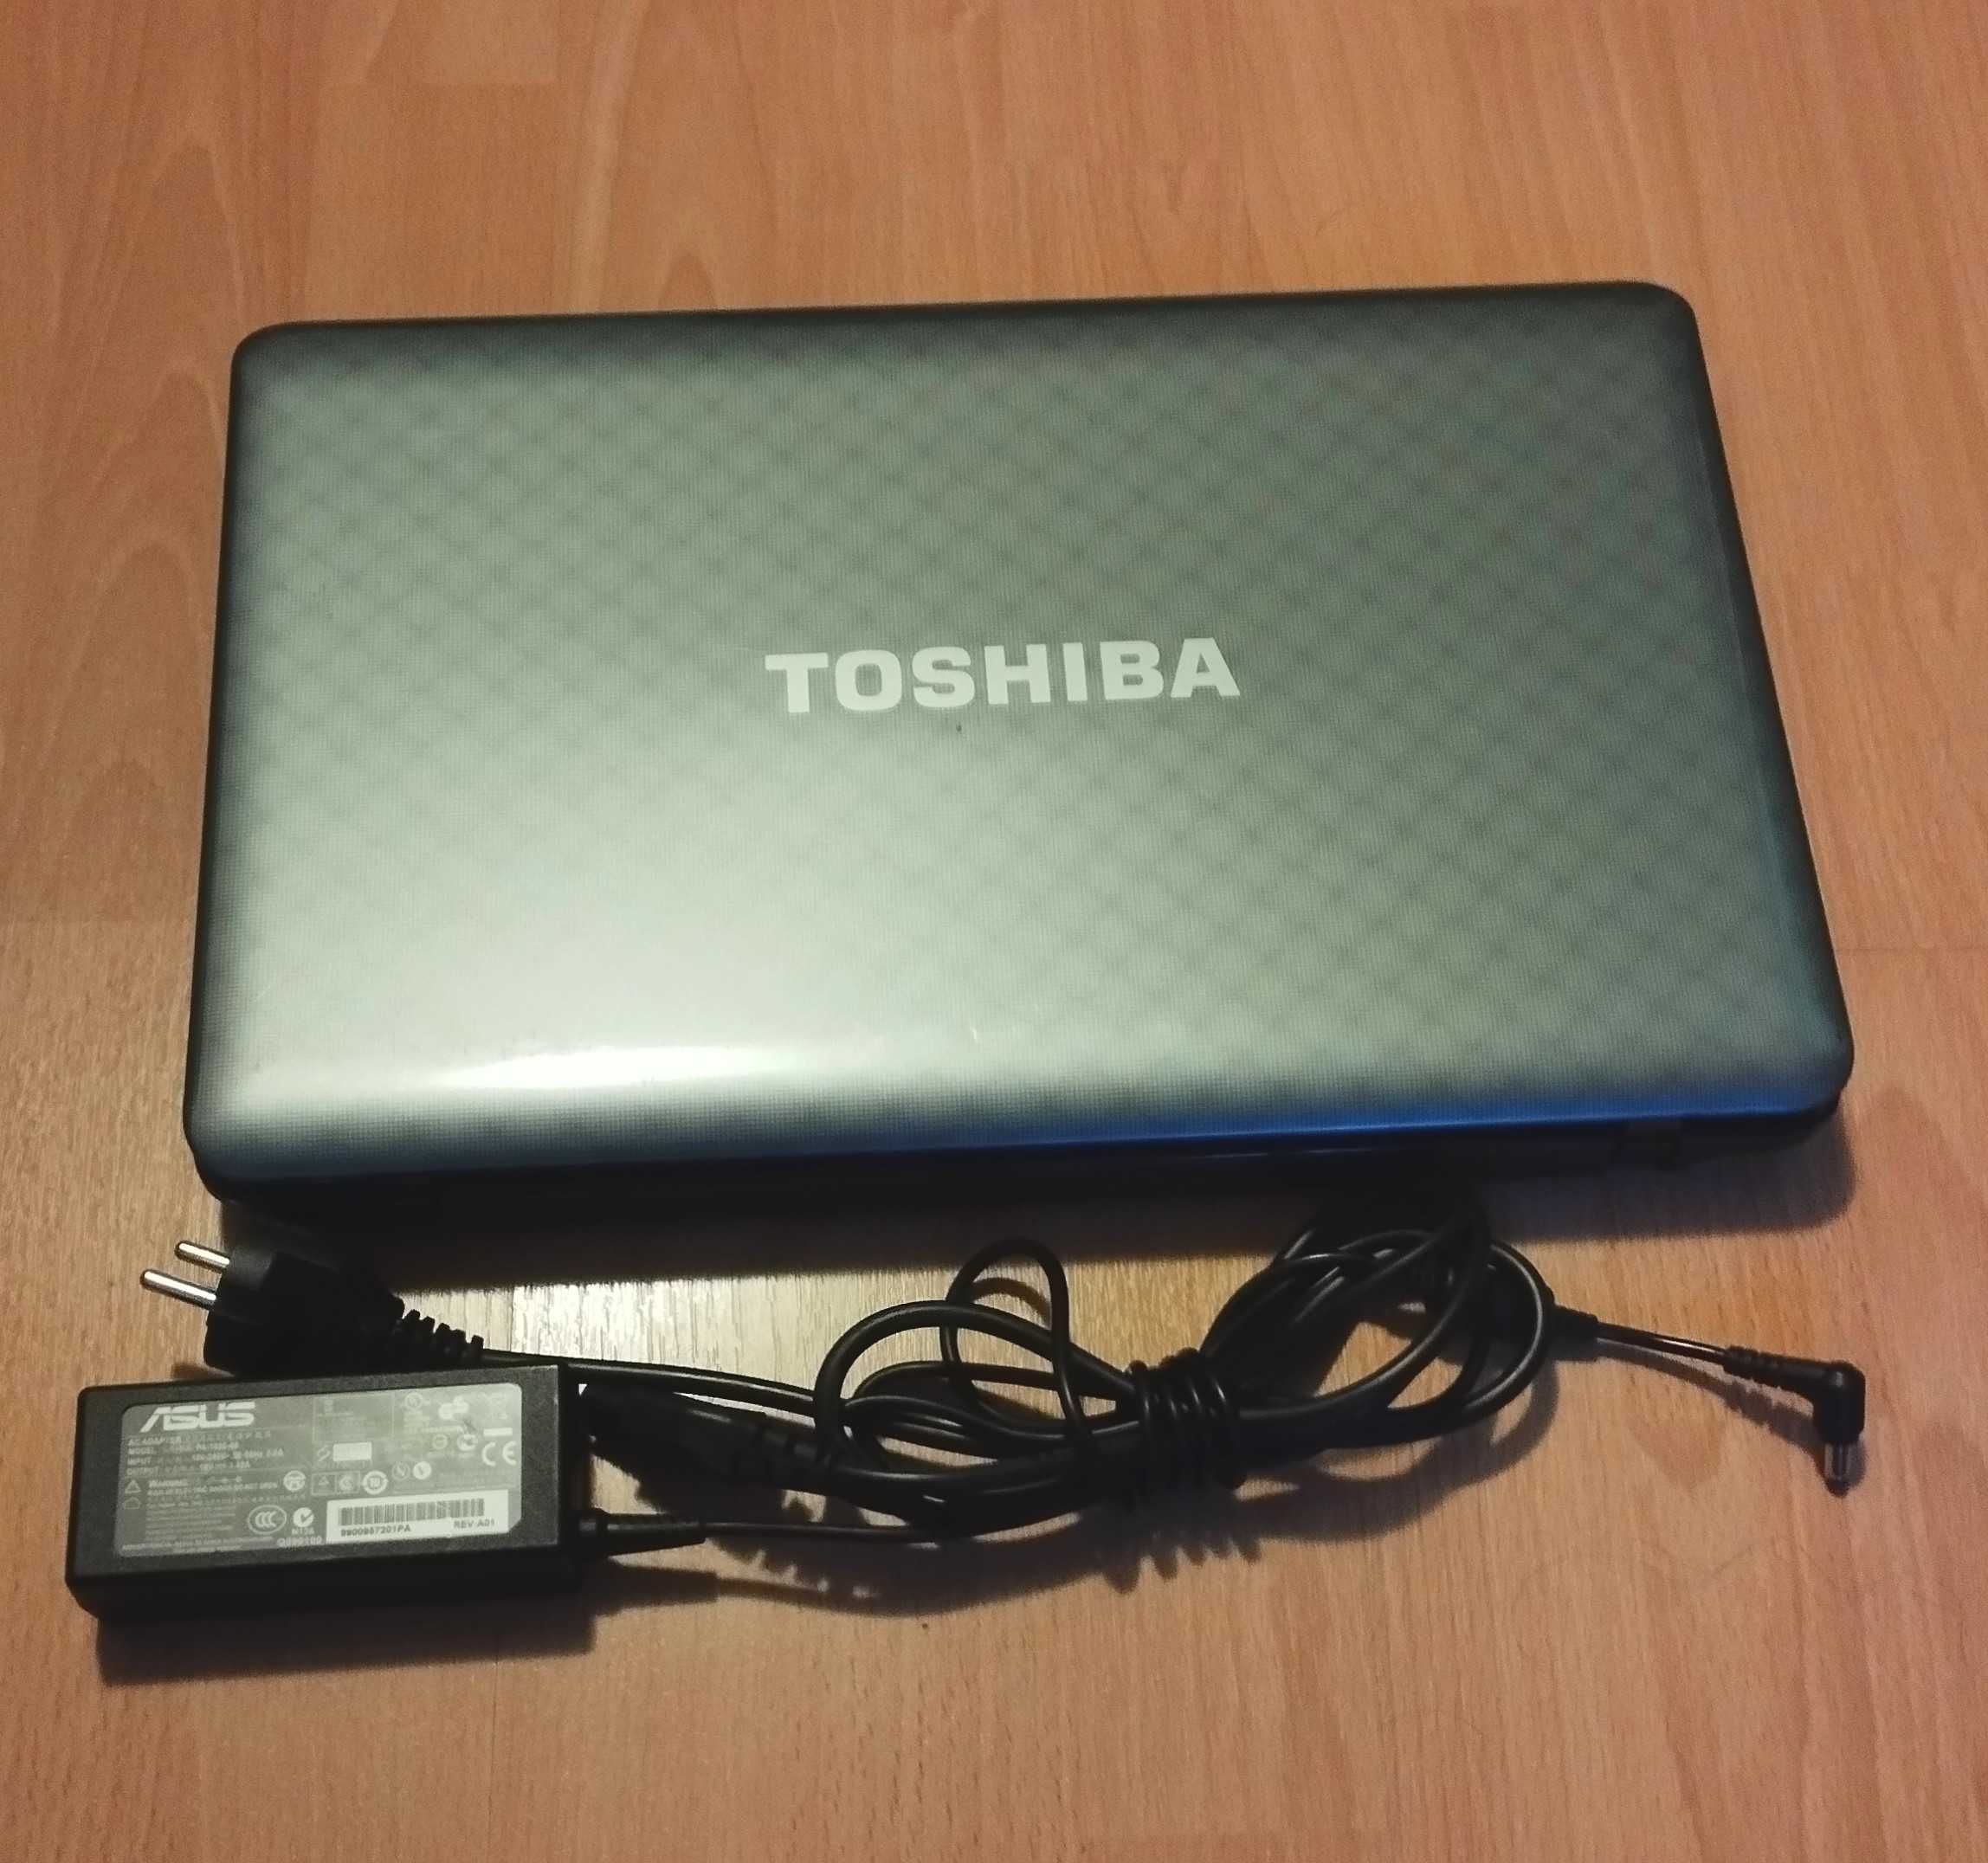 Toshiba Core I5, 8GB RAM, HDD 500GB, GT 525M 2GB, baterie 1,5 ore